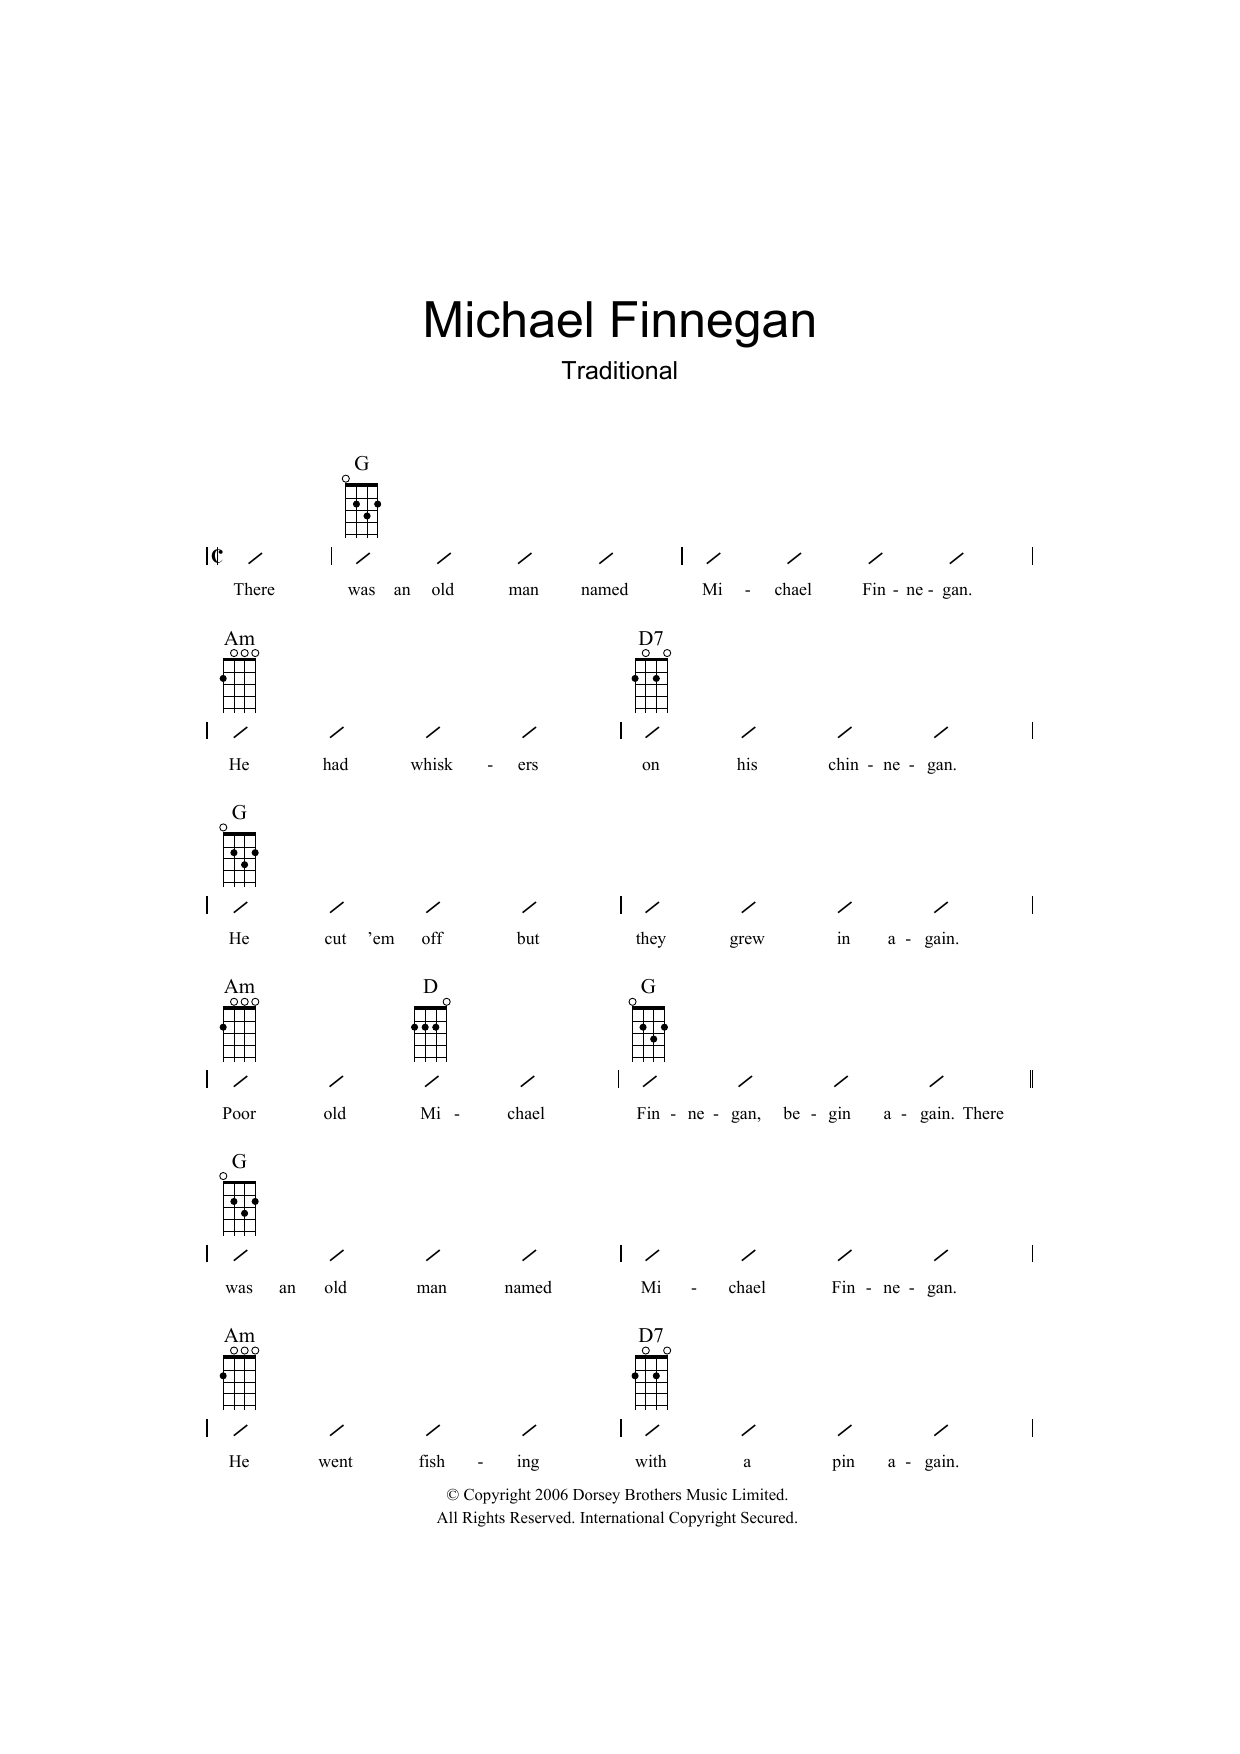 Download Traditional Michael Finnegan Sheet Music